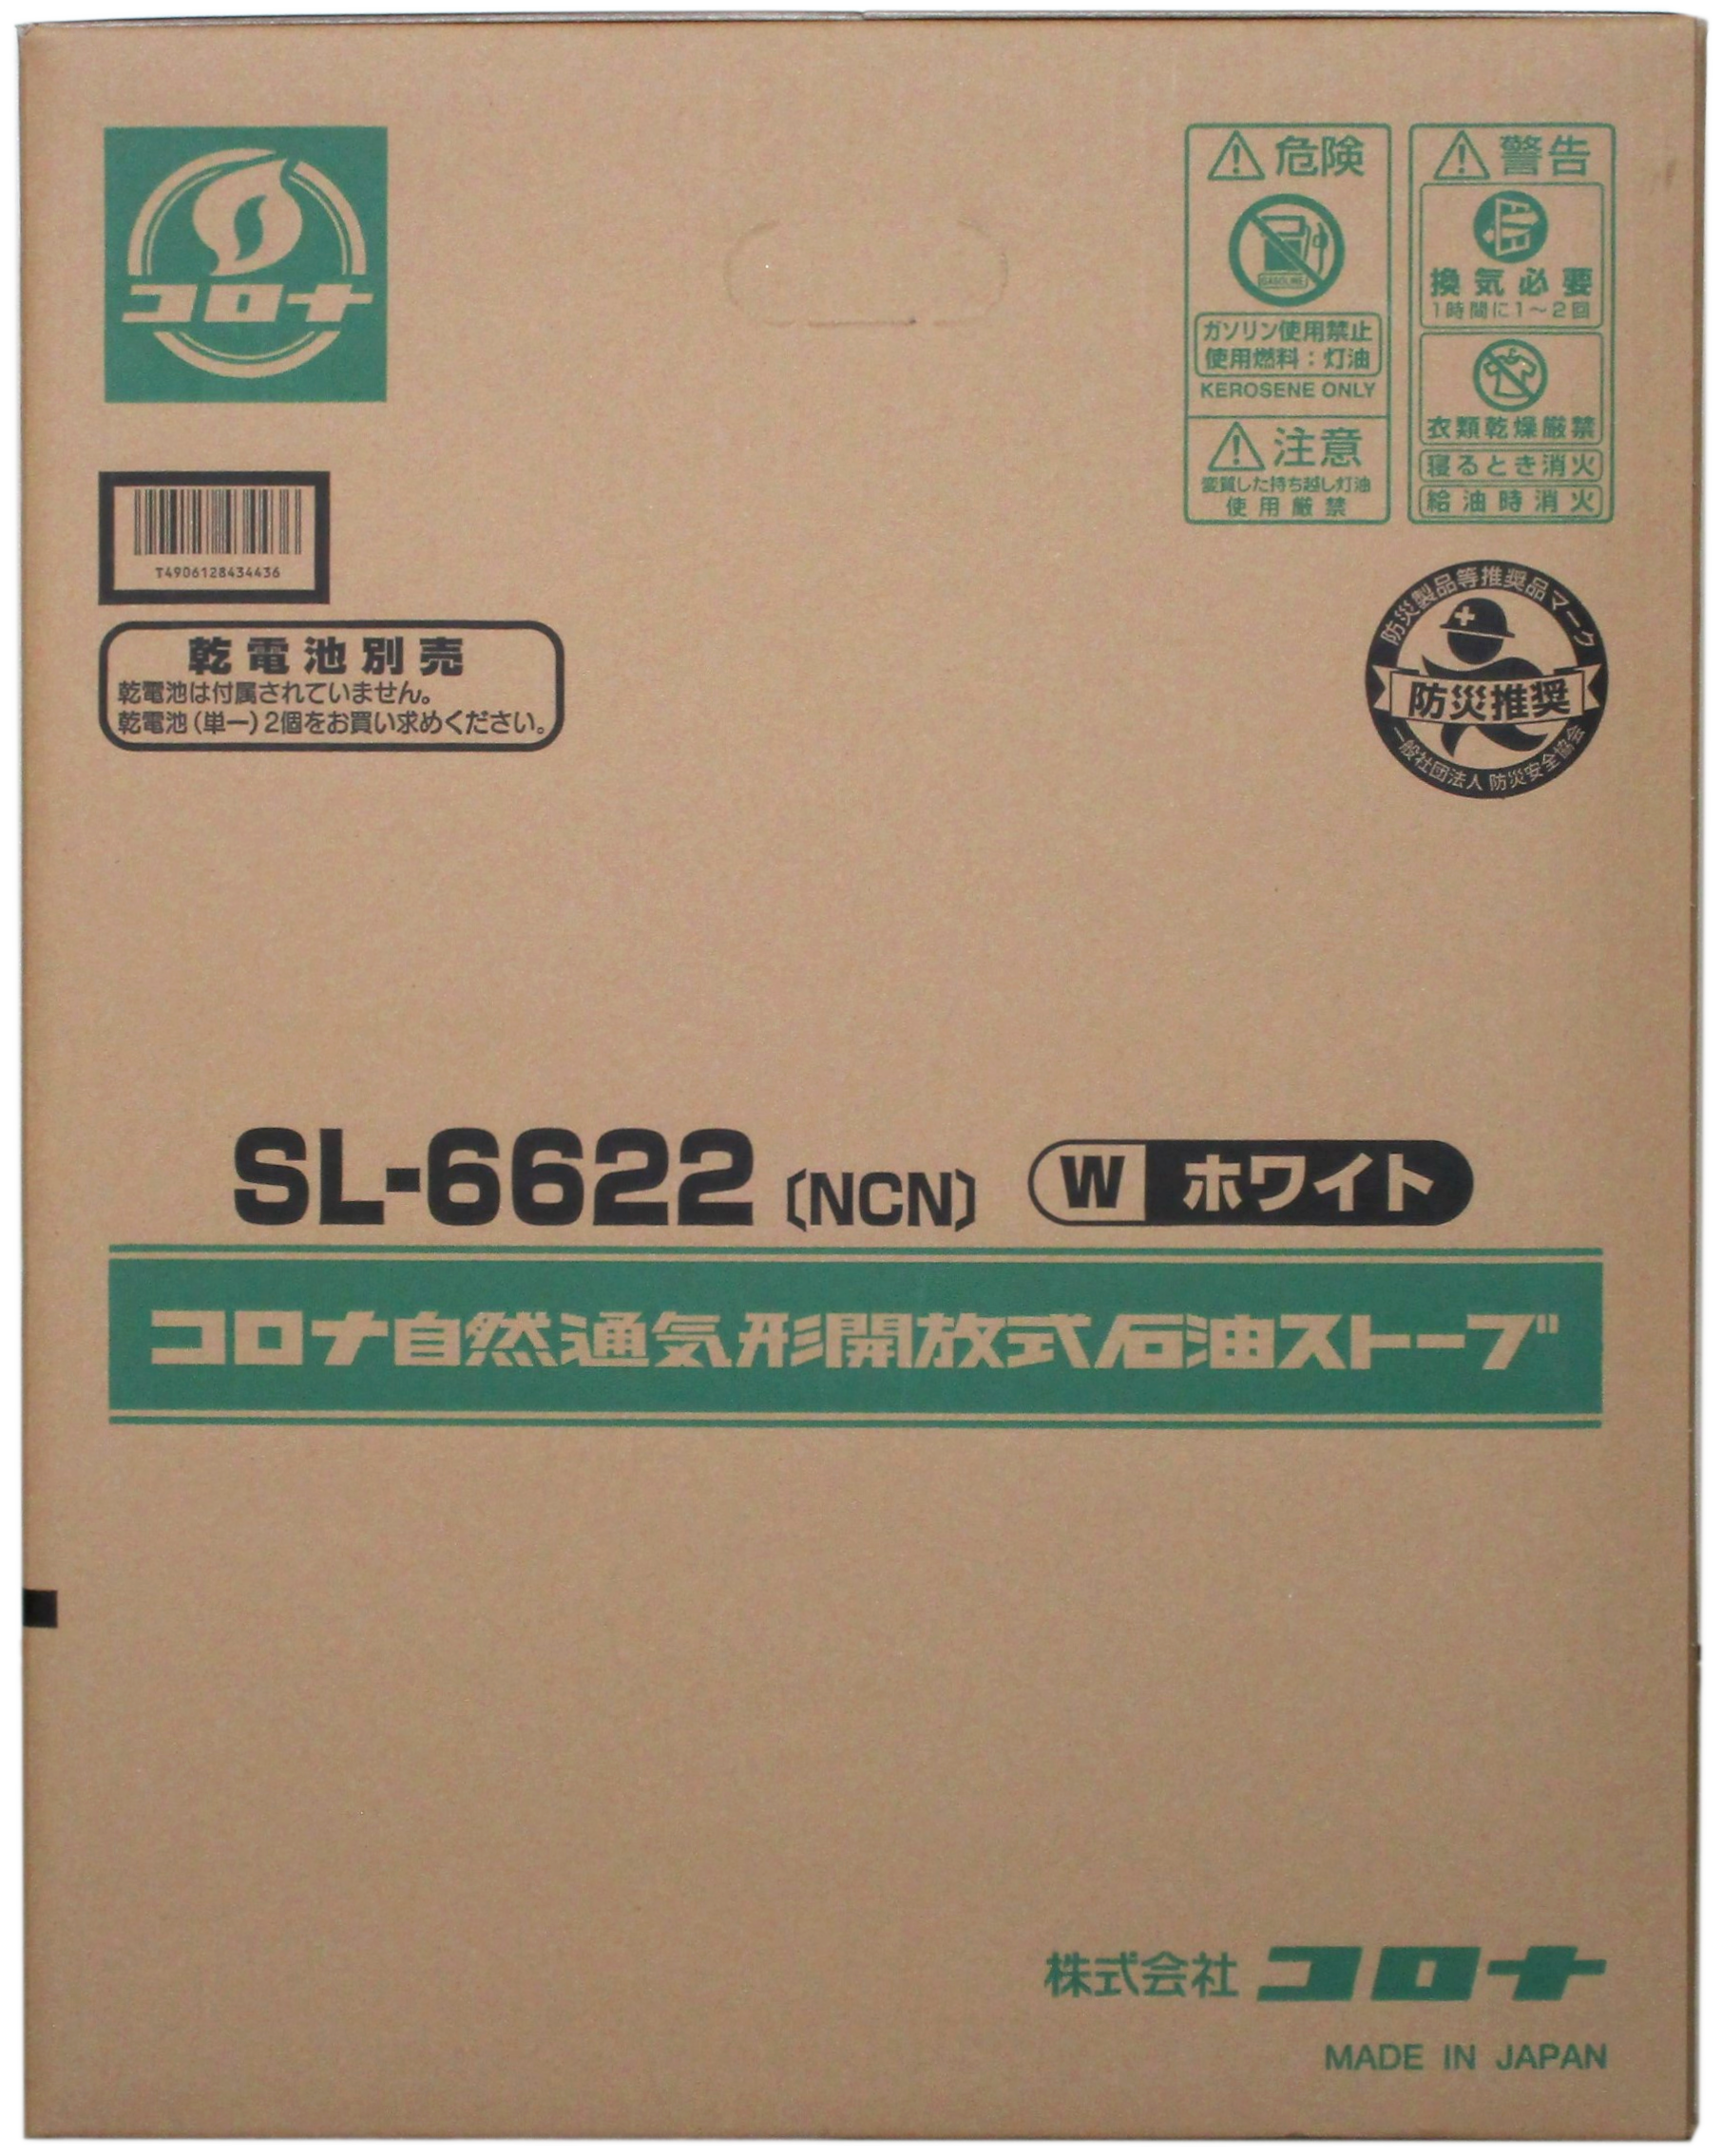 Portable Kerosene Heater SL-66 | Products | CORONA